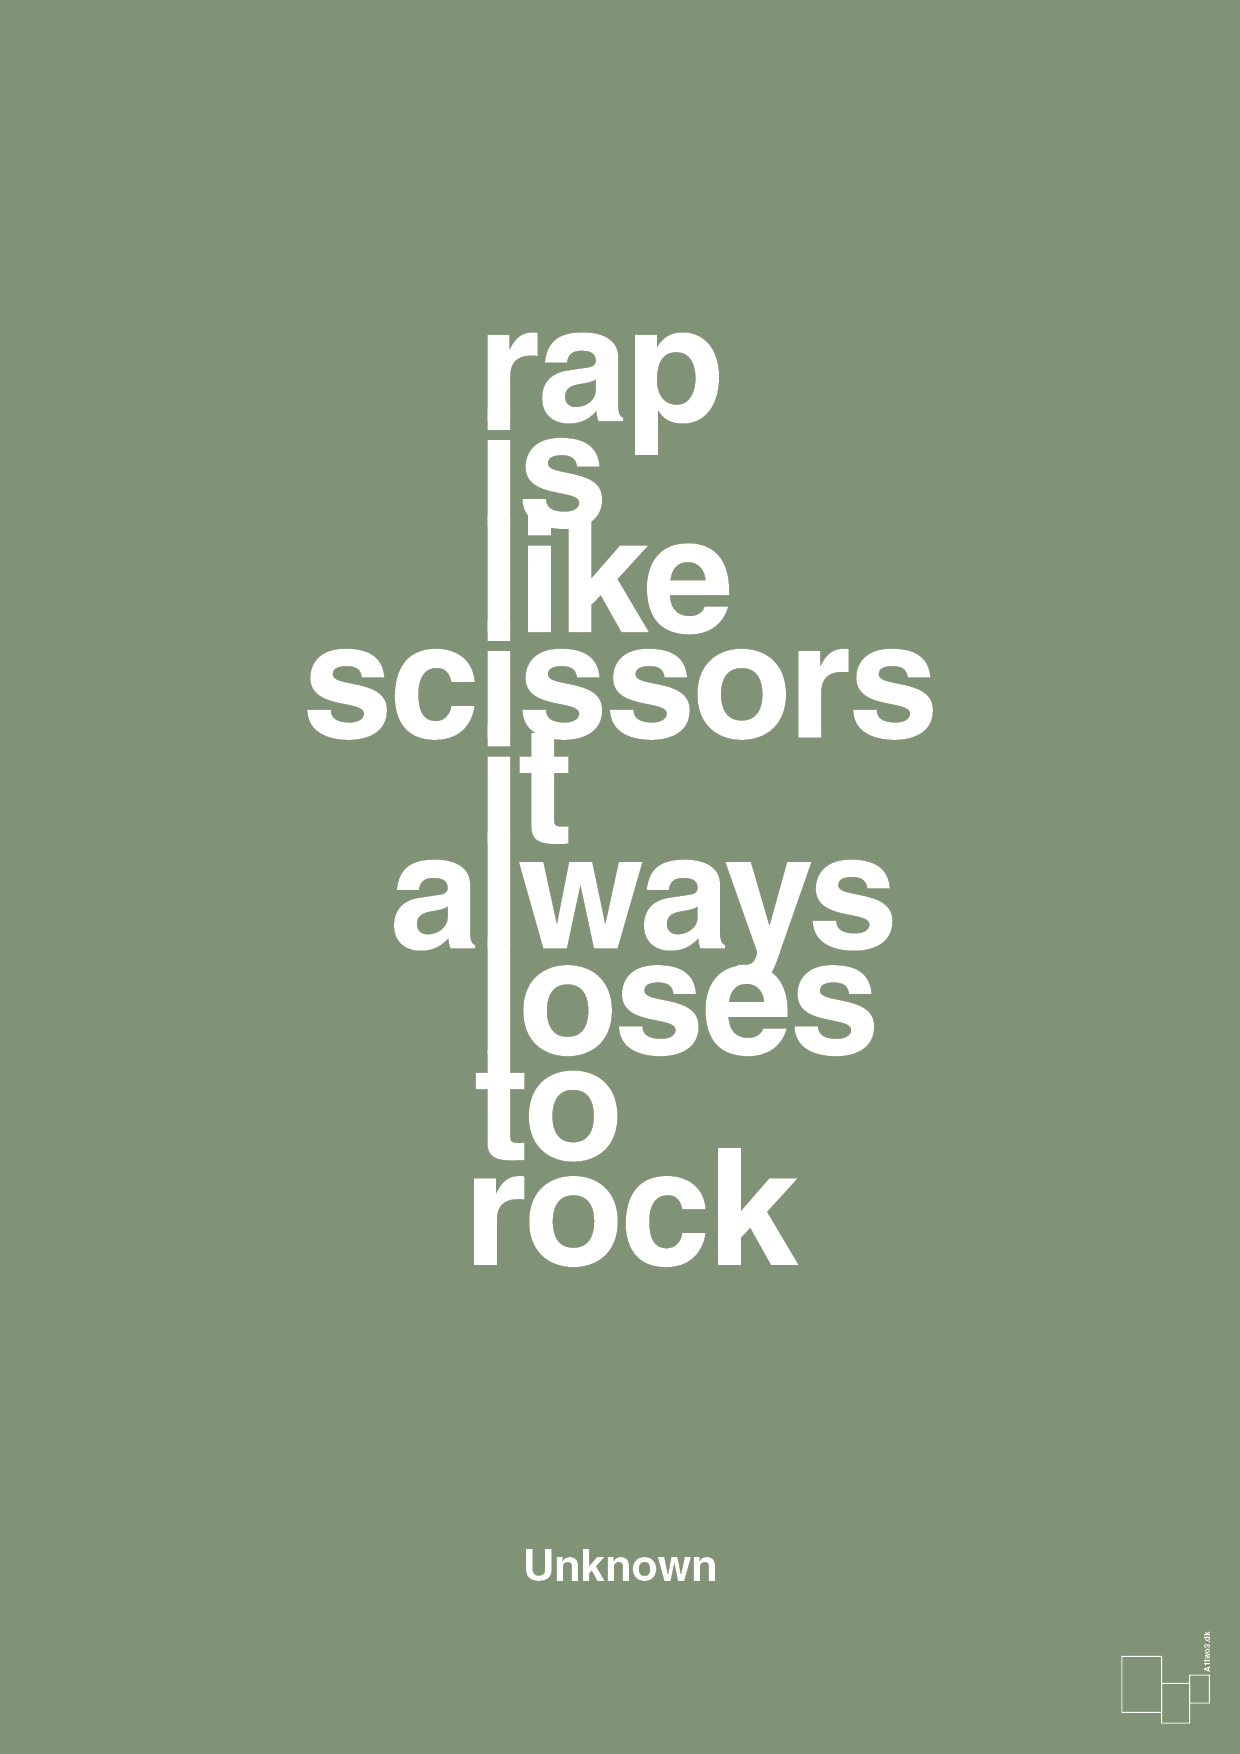 rap is like scissors it always loses to rock - Plakat med Citater i Jade